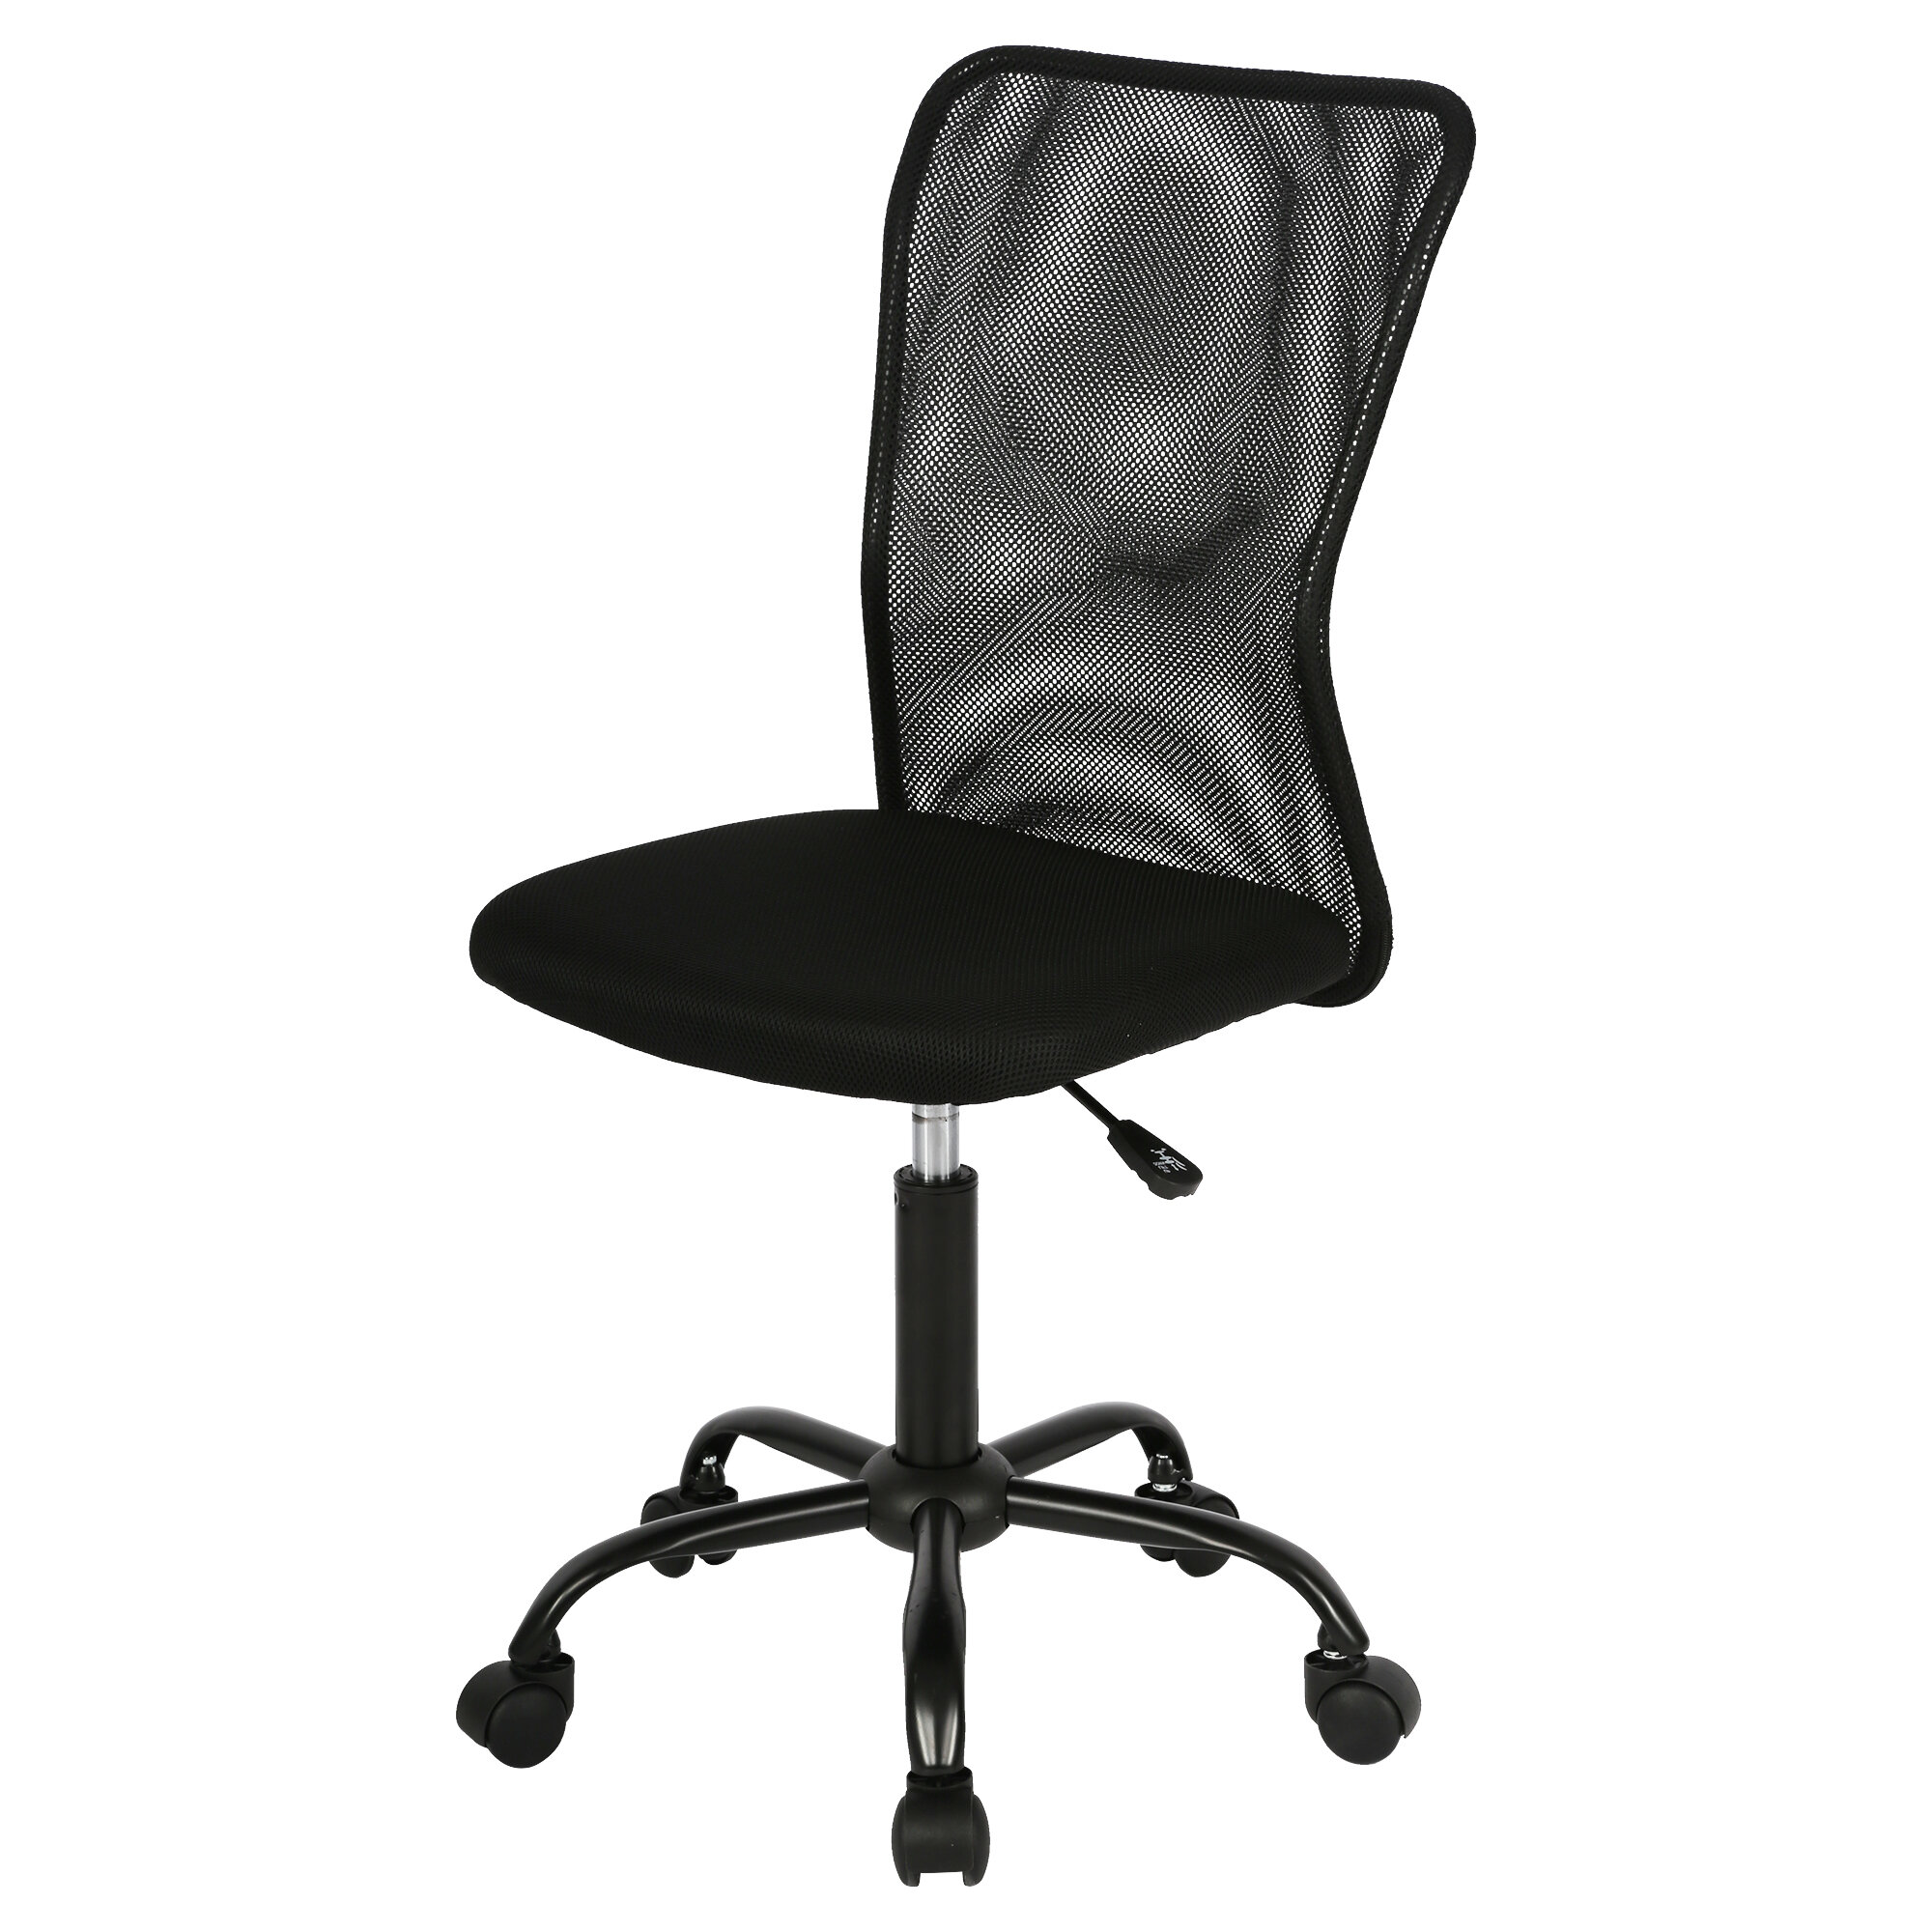 ergonomic office chair cheap desk chair mesh computer chair back support  modern executive mid back rolling swivel chair for women men